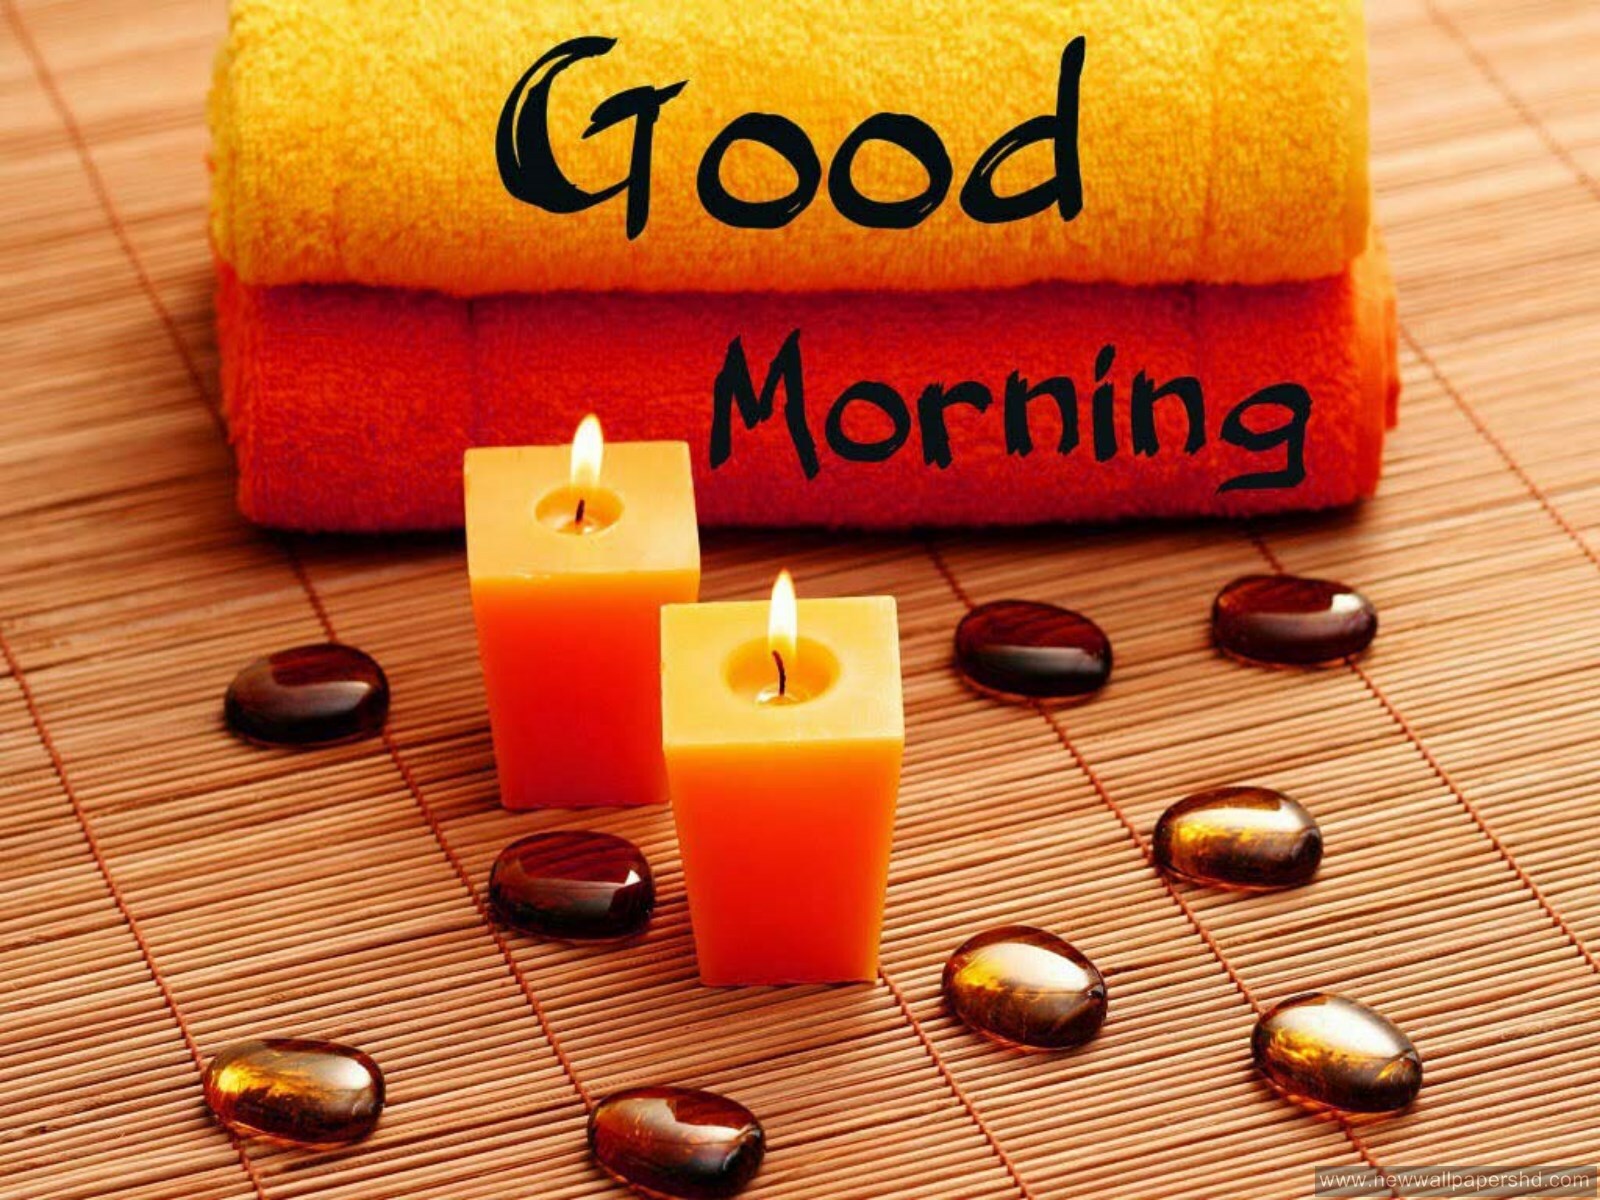 Stylish Good Morning HD Wallpapers in English & Hindi | HD ...